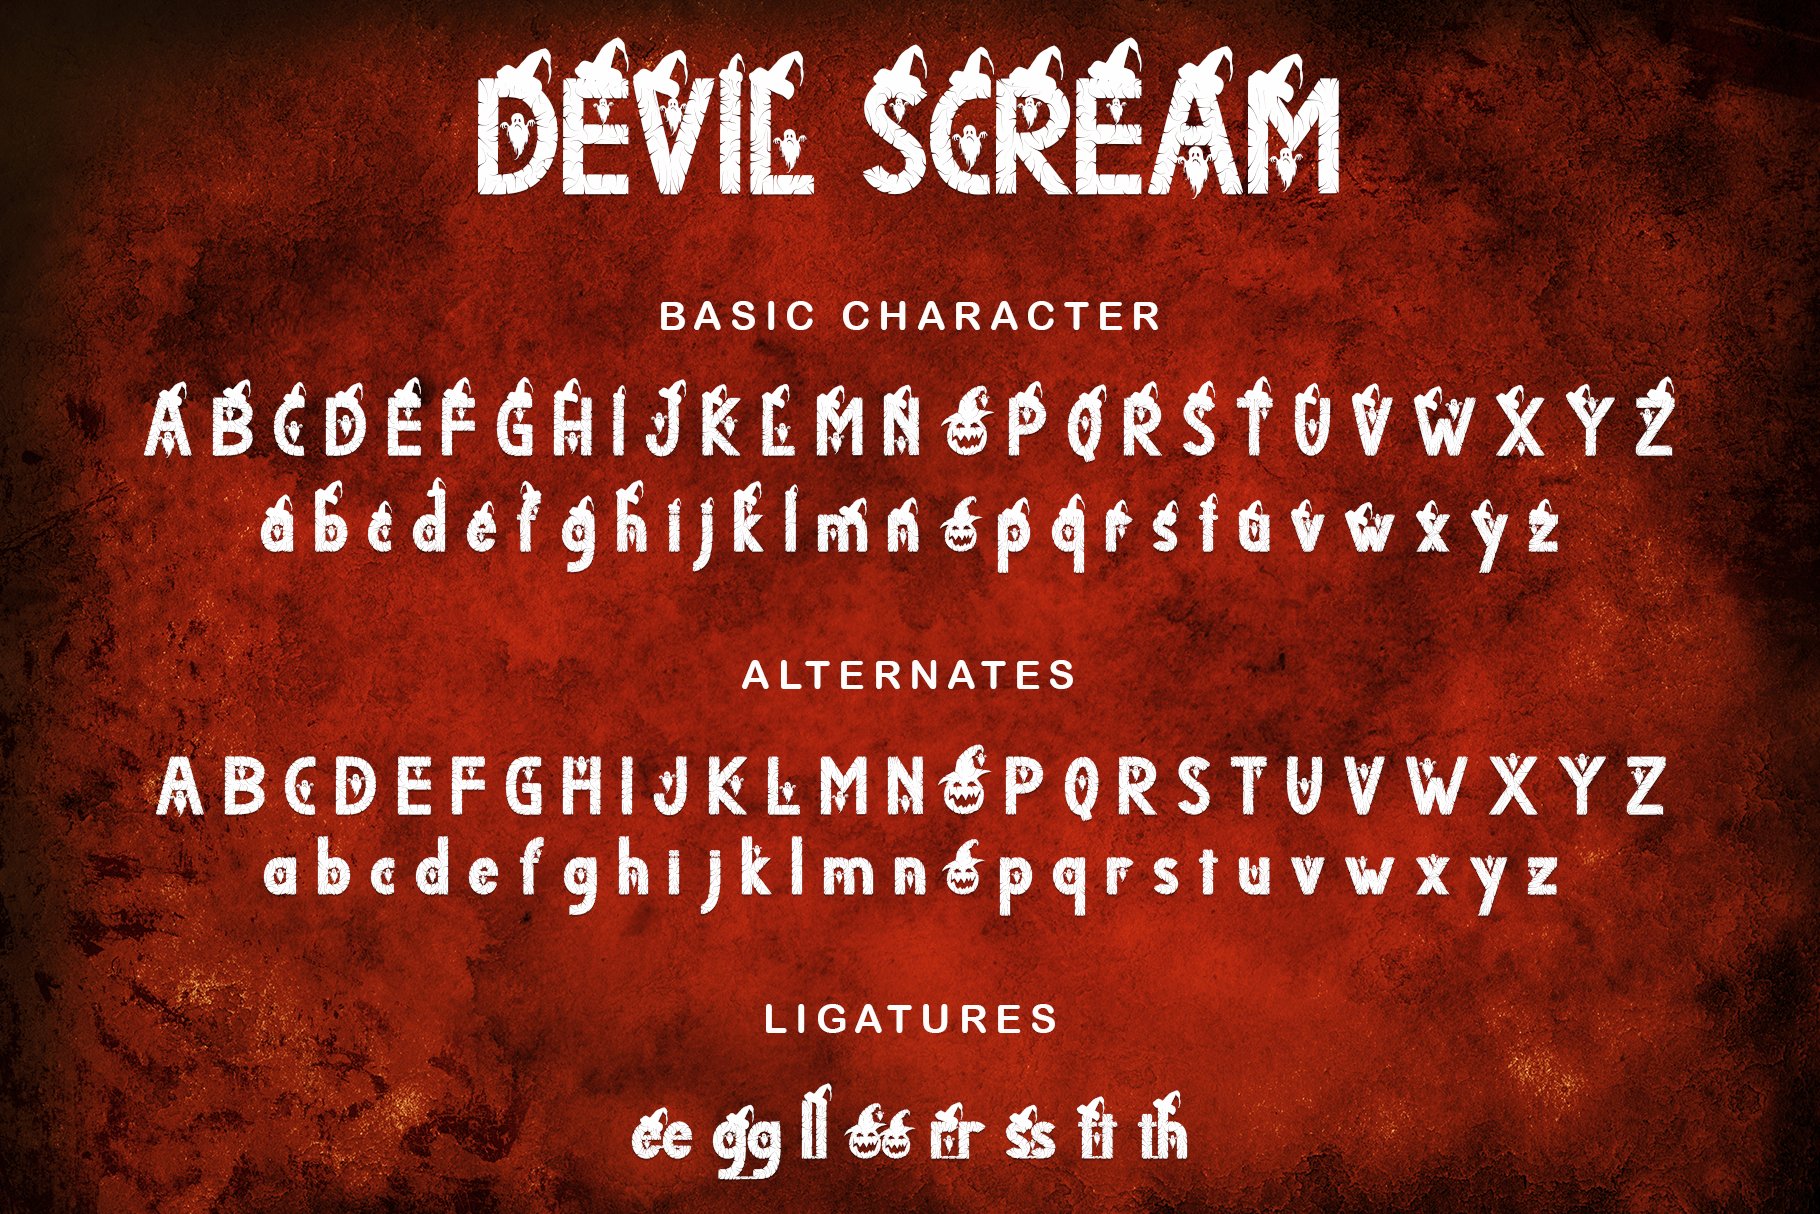 devil scream preview 8 fbd 98